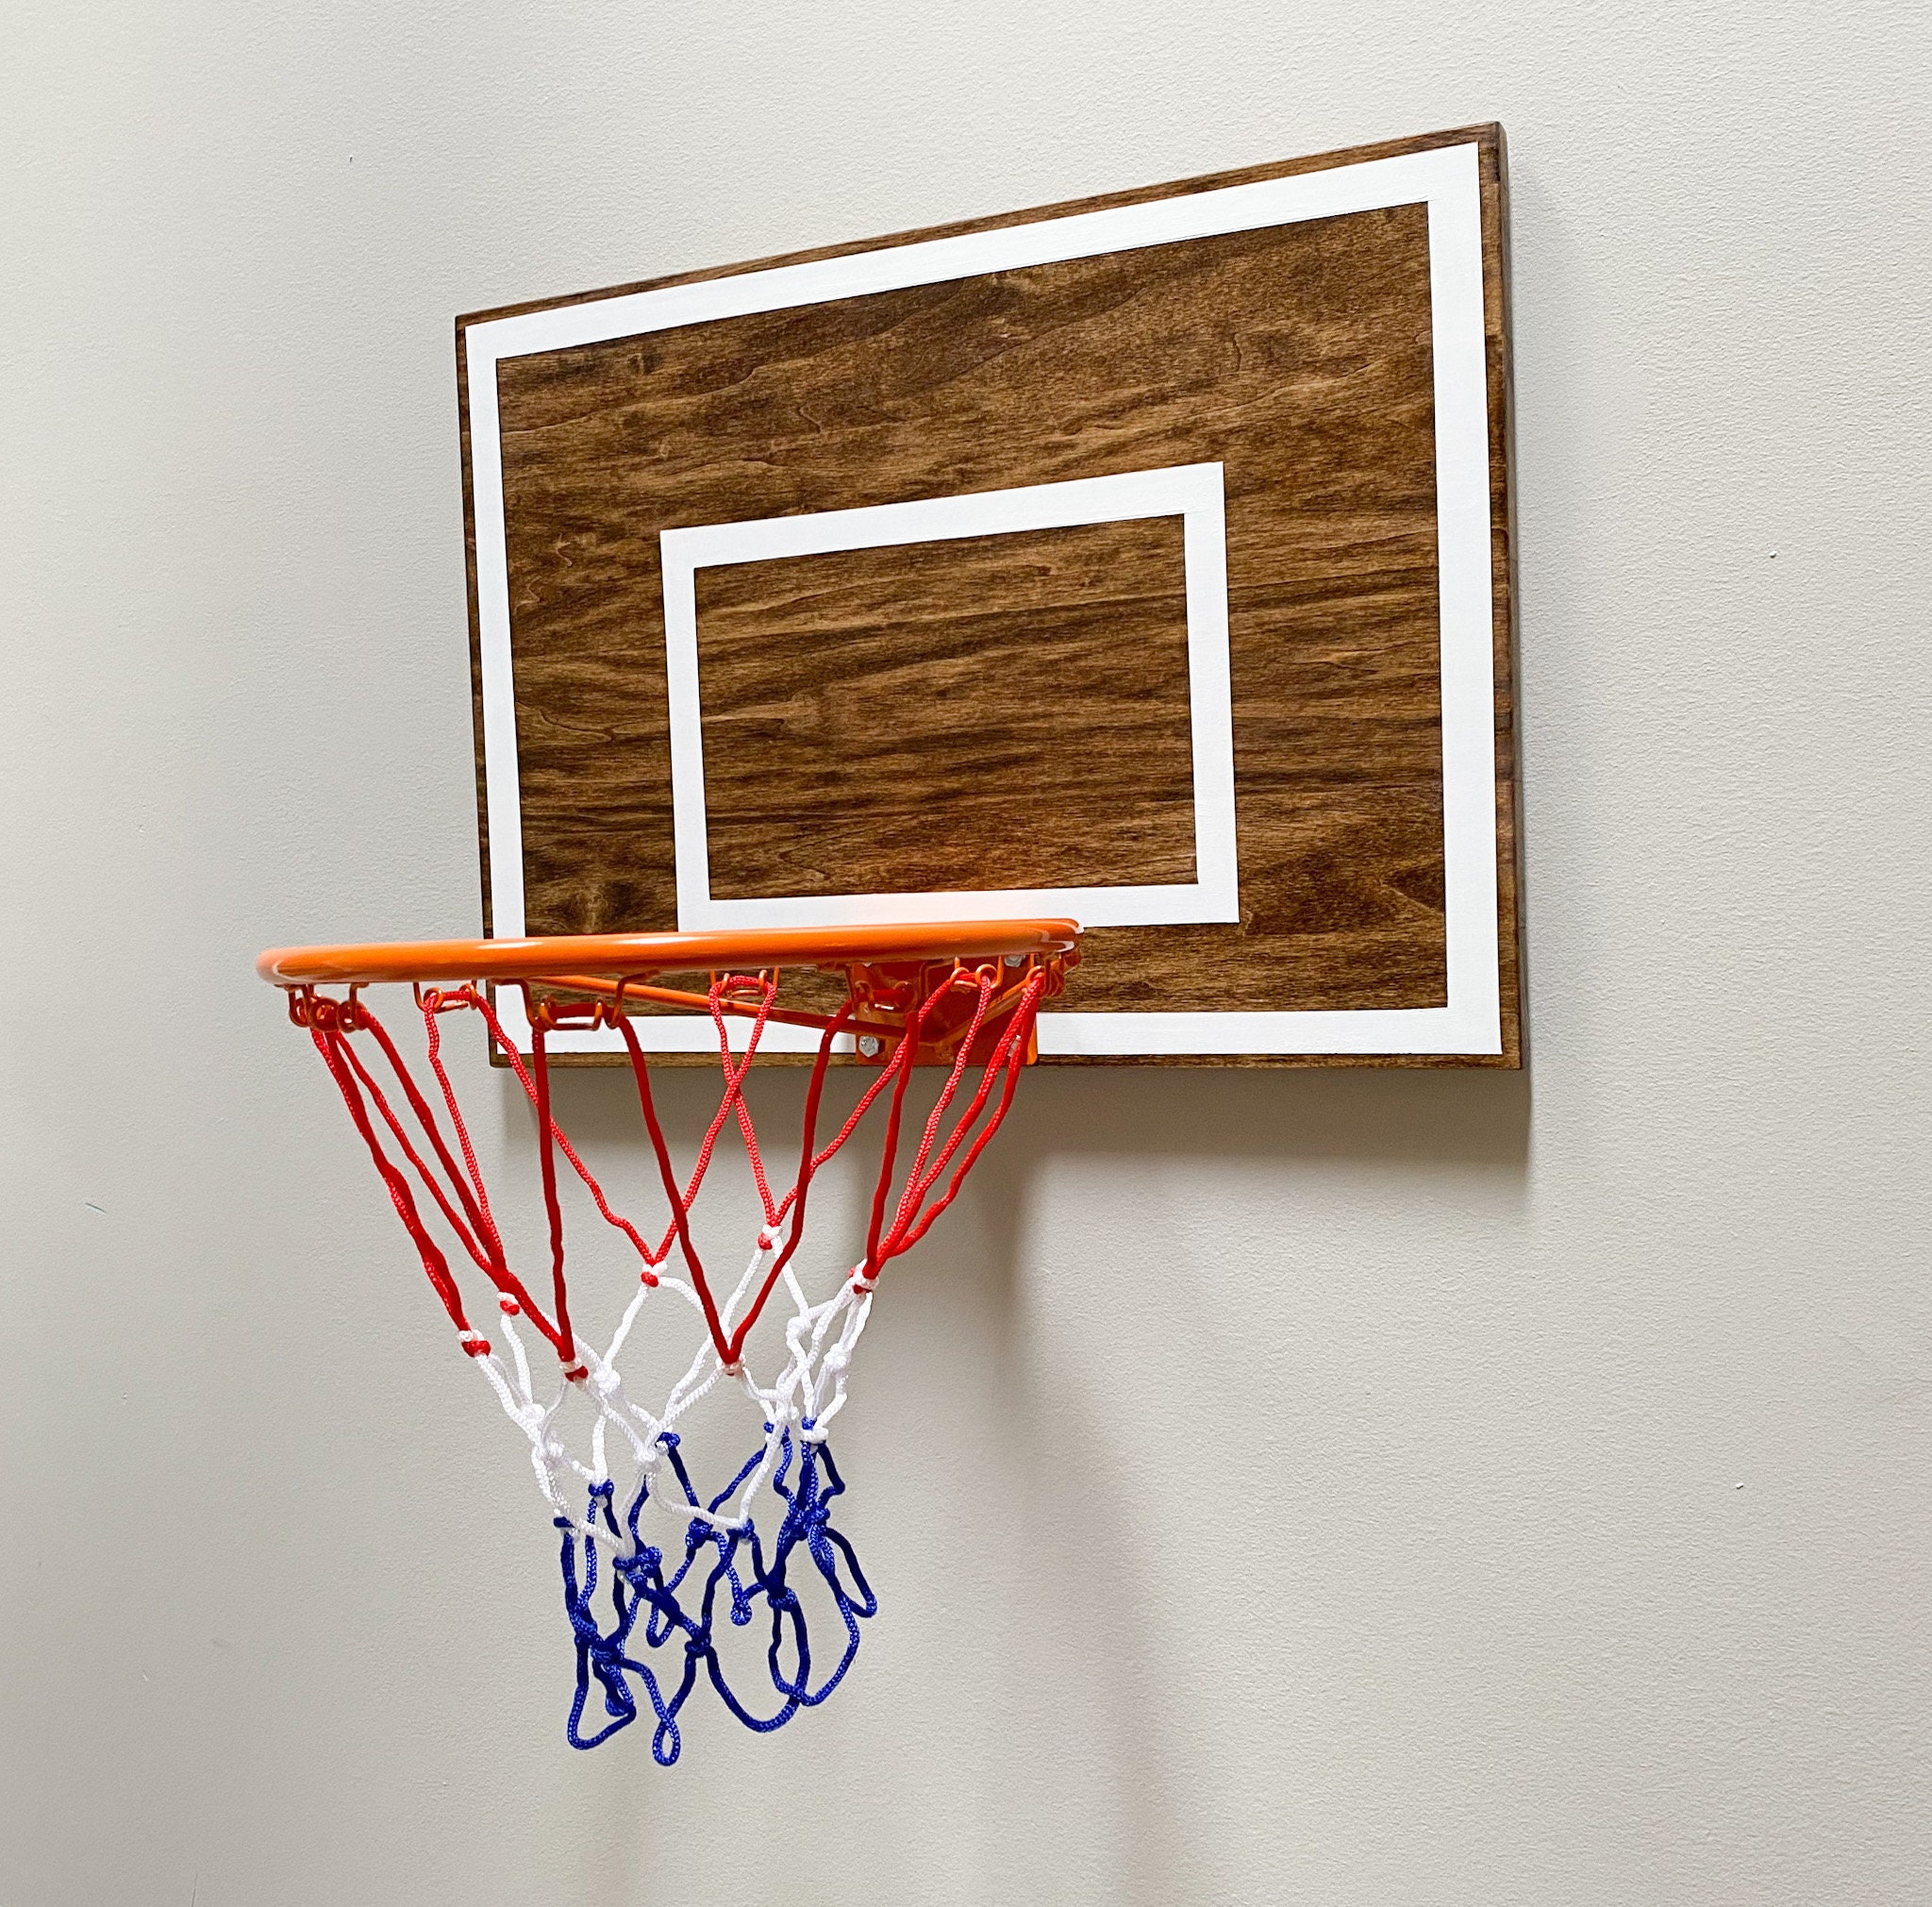 ropoda Mini Basketball Hoop, Indoor Basketball Hoop for Kids, 17×12  Shatter Resistant Backboard - Complete Accessories Included